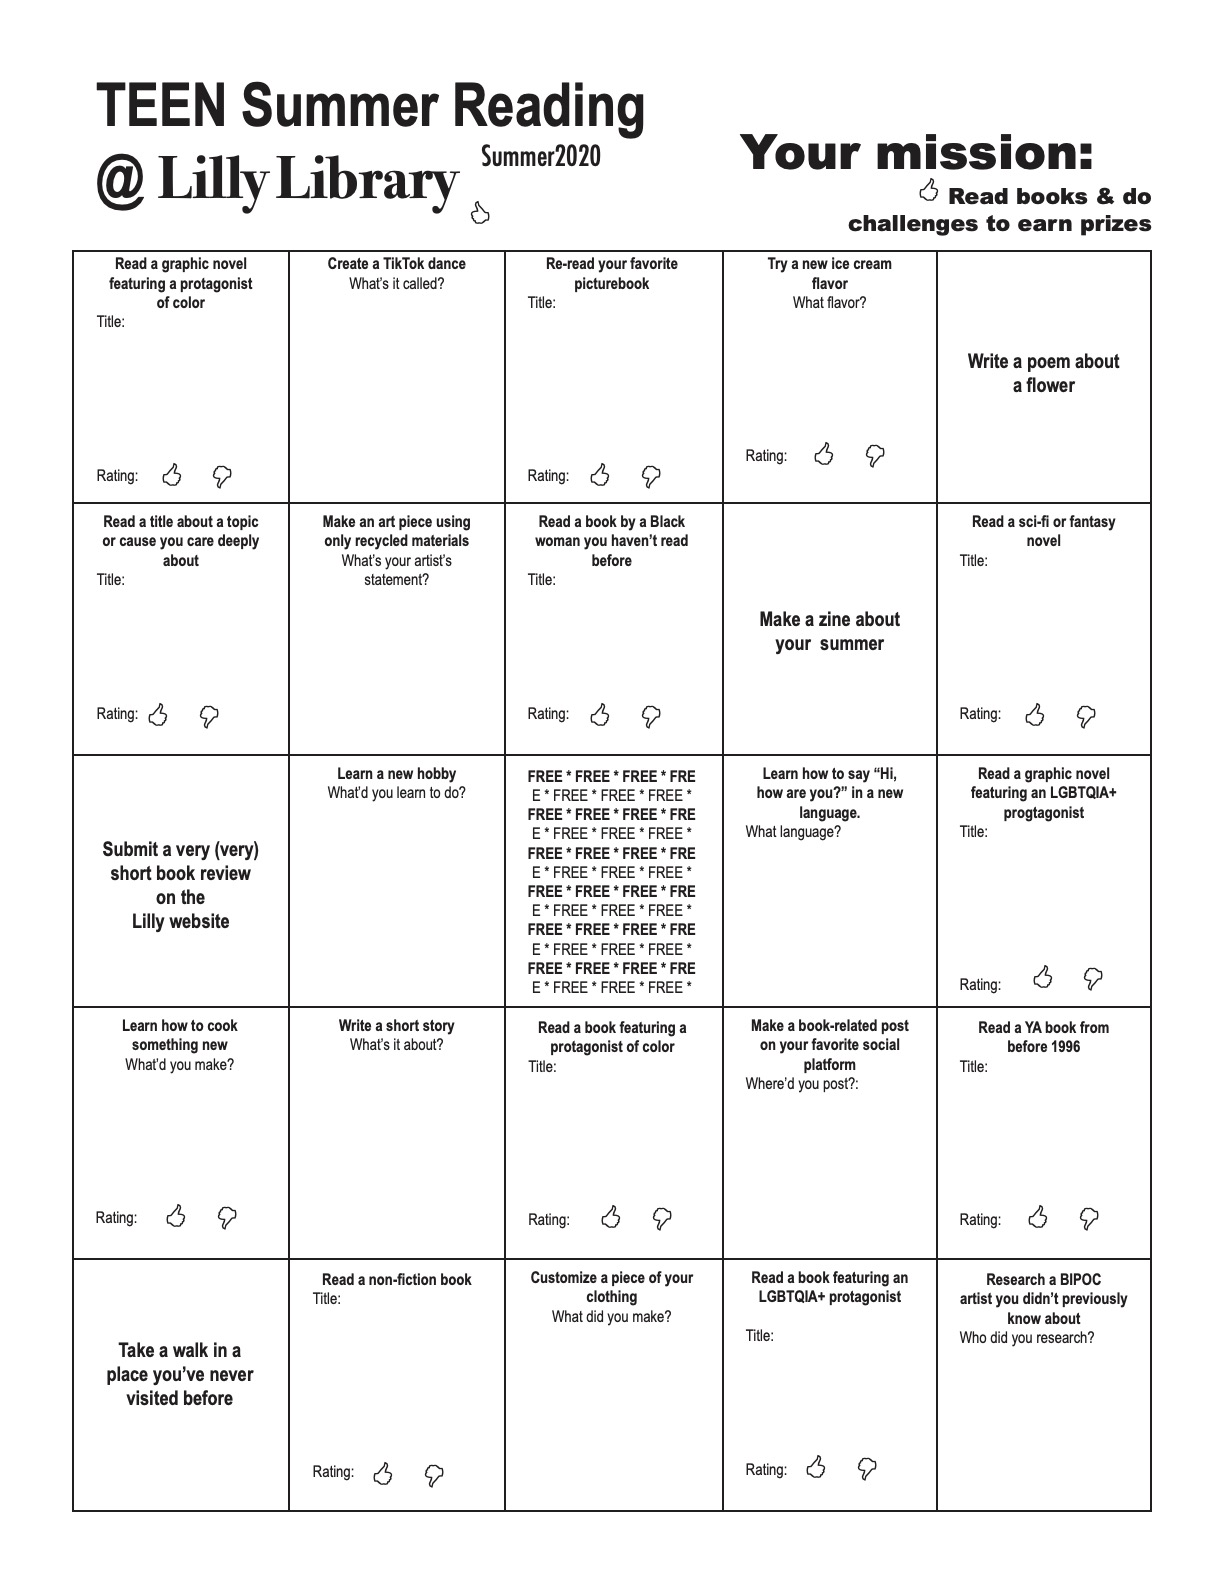 bingo board for summer reading program at Lilly